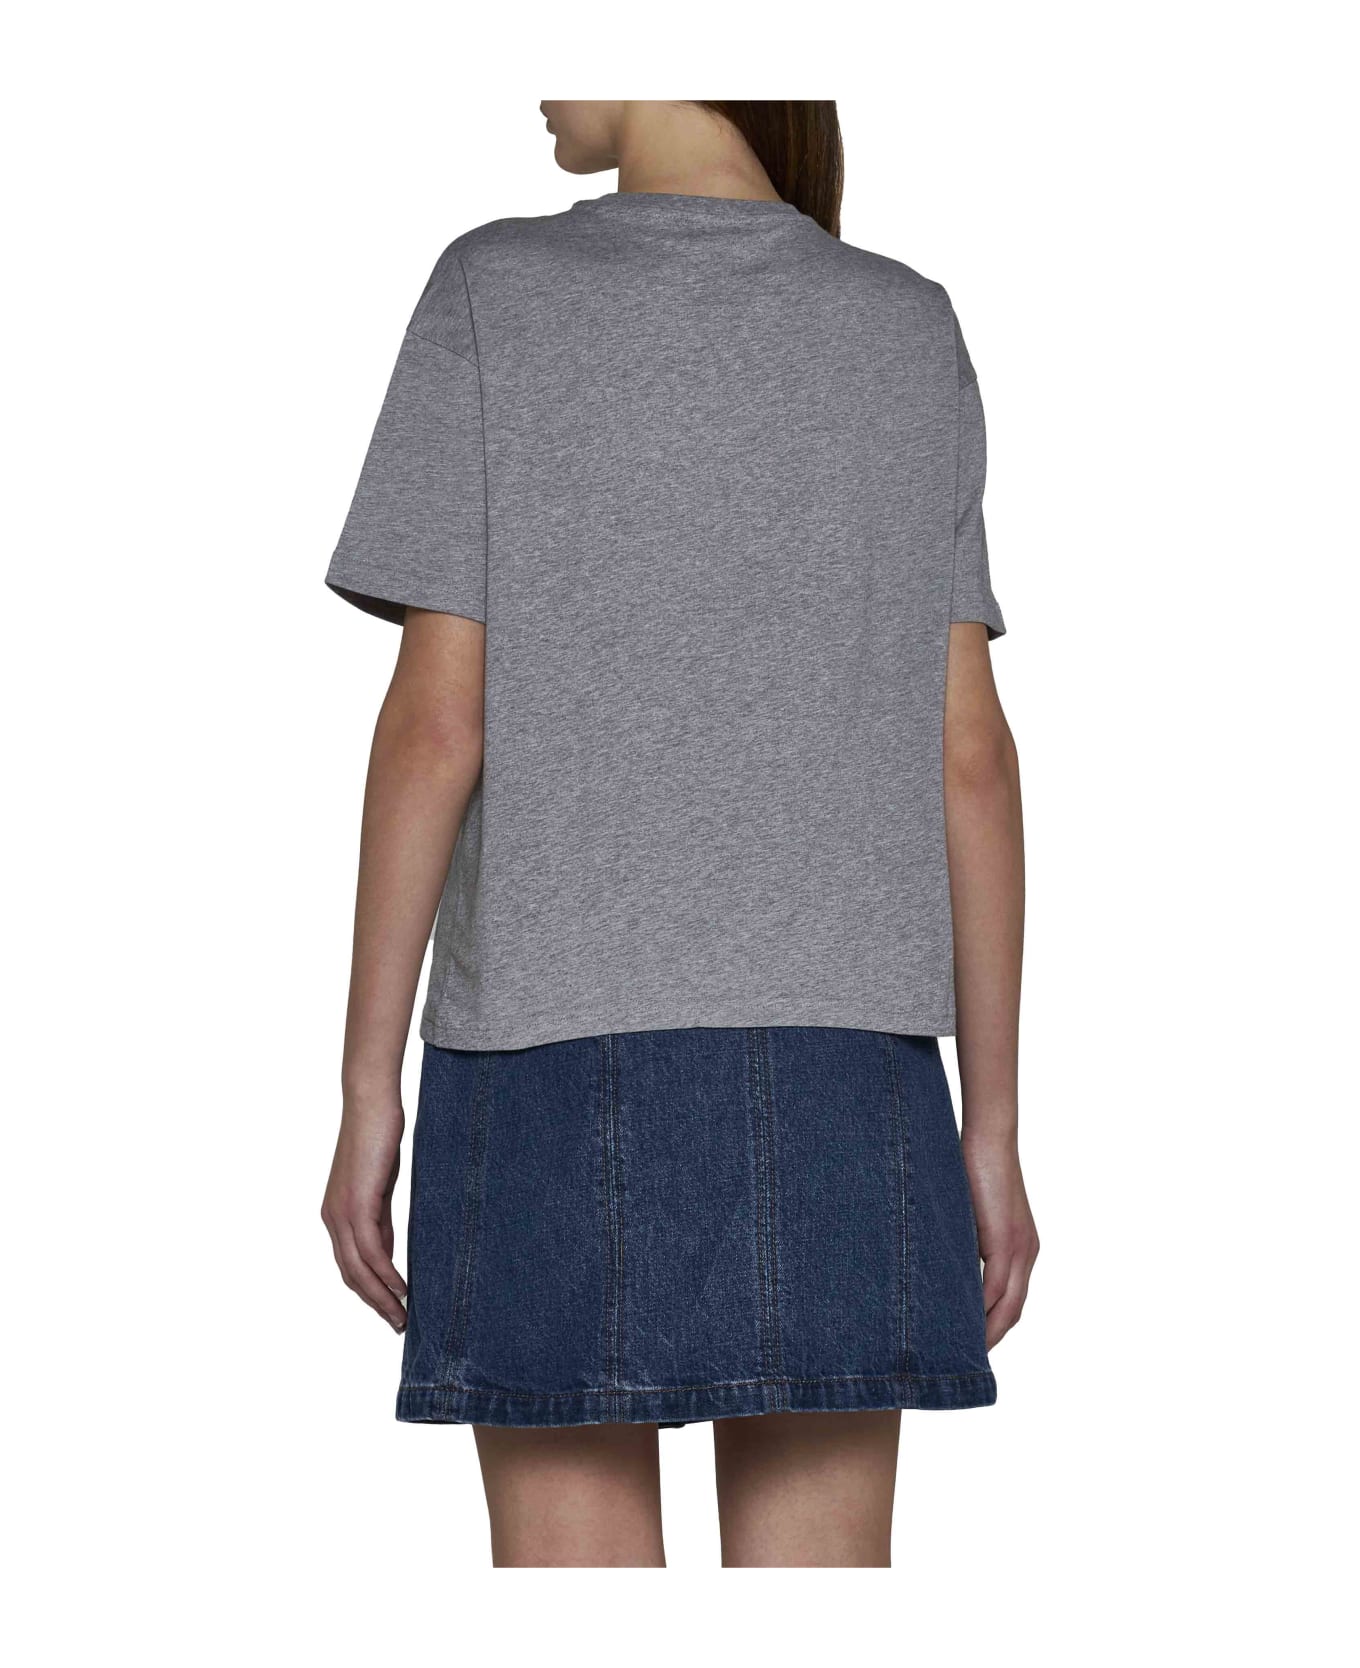 A.P.C. Ana T-shirt - Heathered light grey